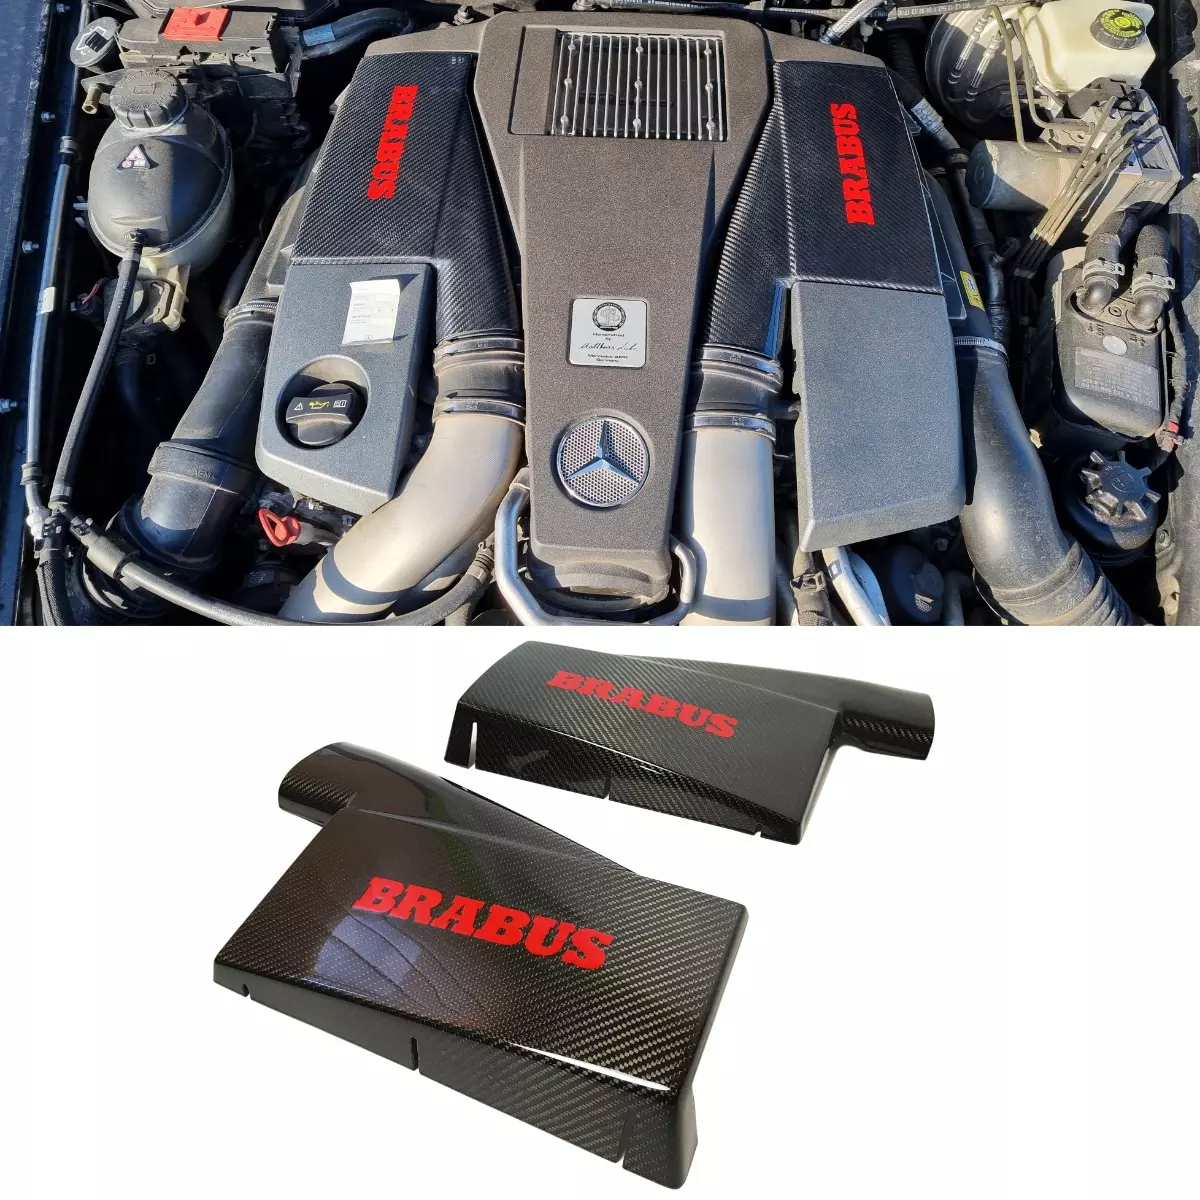 Mercedes-Benz W463 G63 G-Class Brabus Carbon Fiber Engine Air Filter Covers